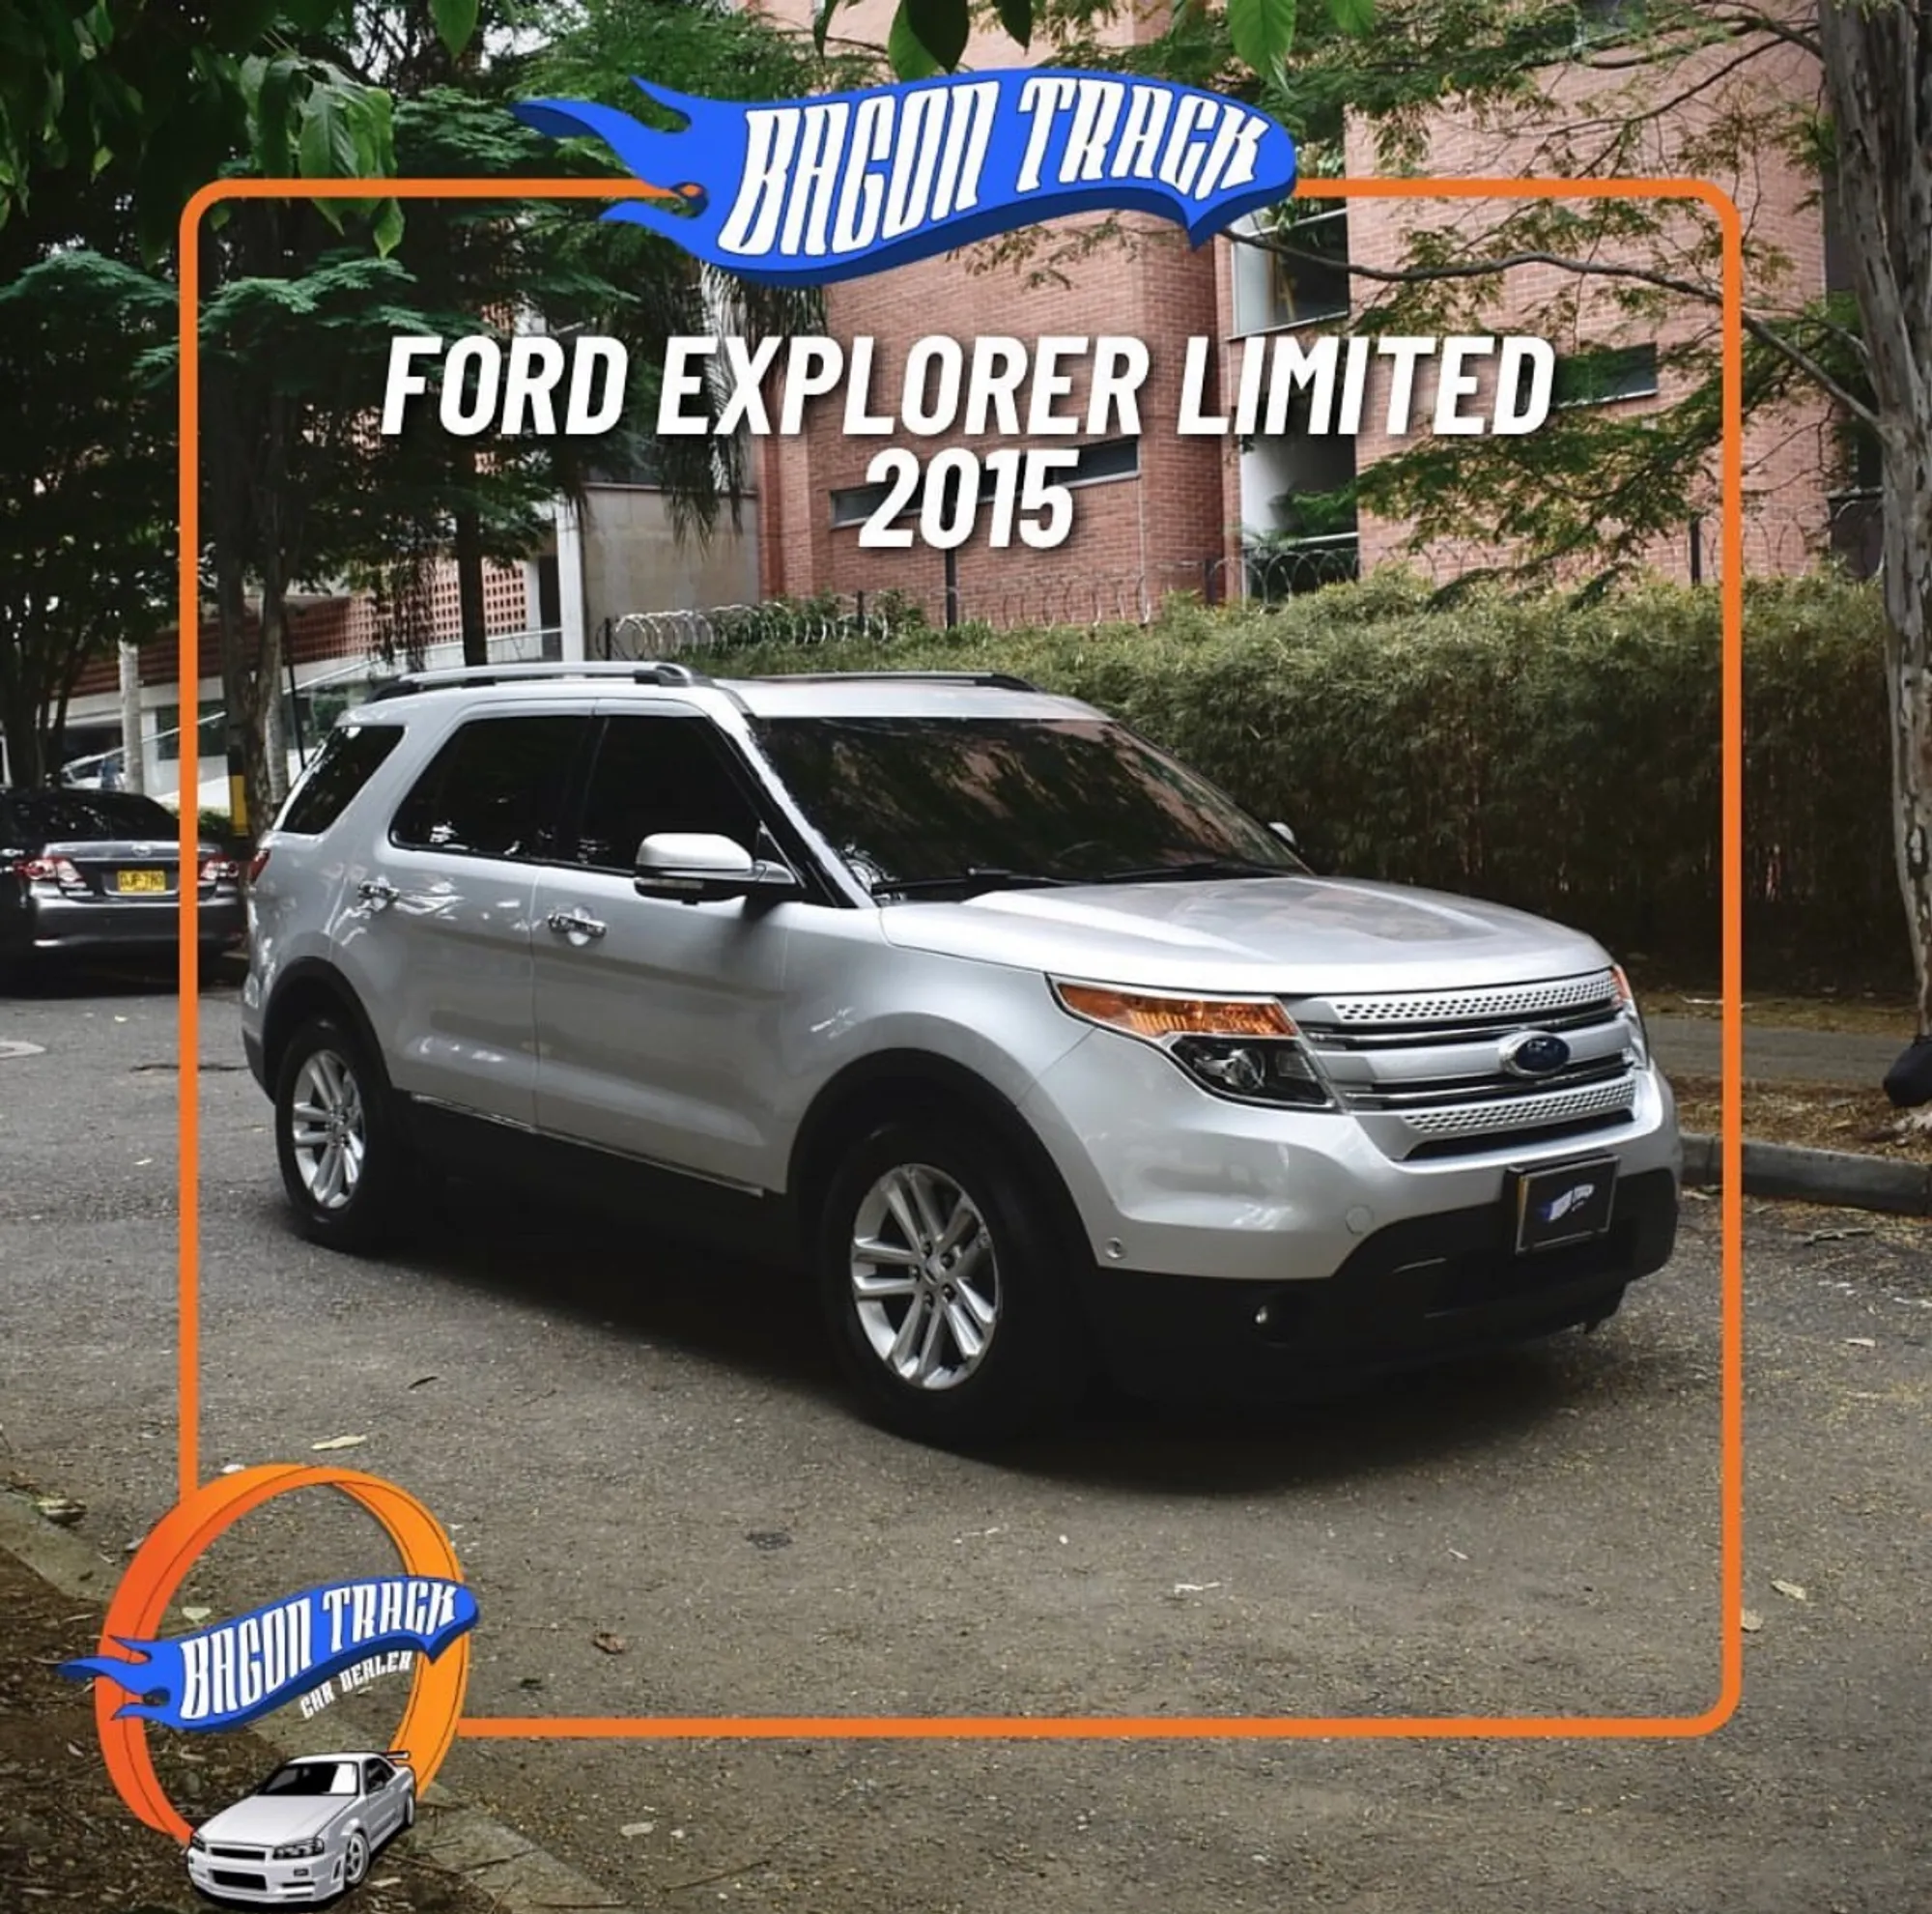 Ford Explorer limited 2015